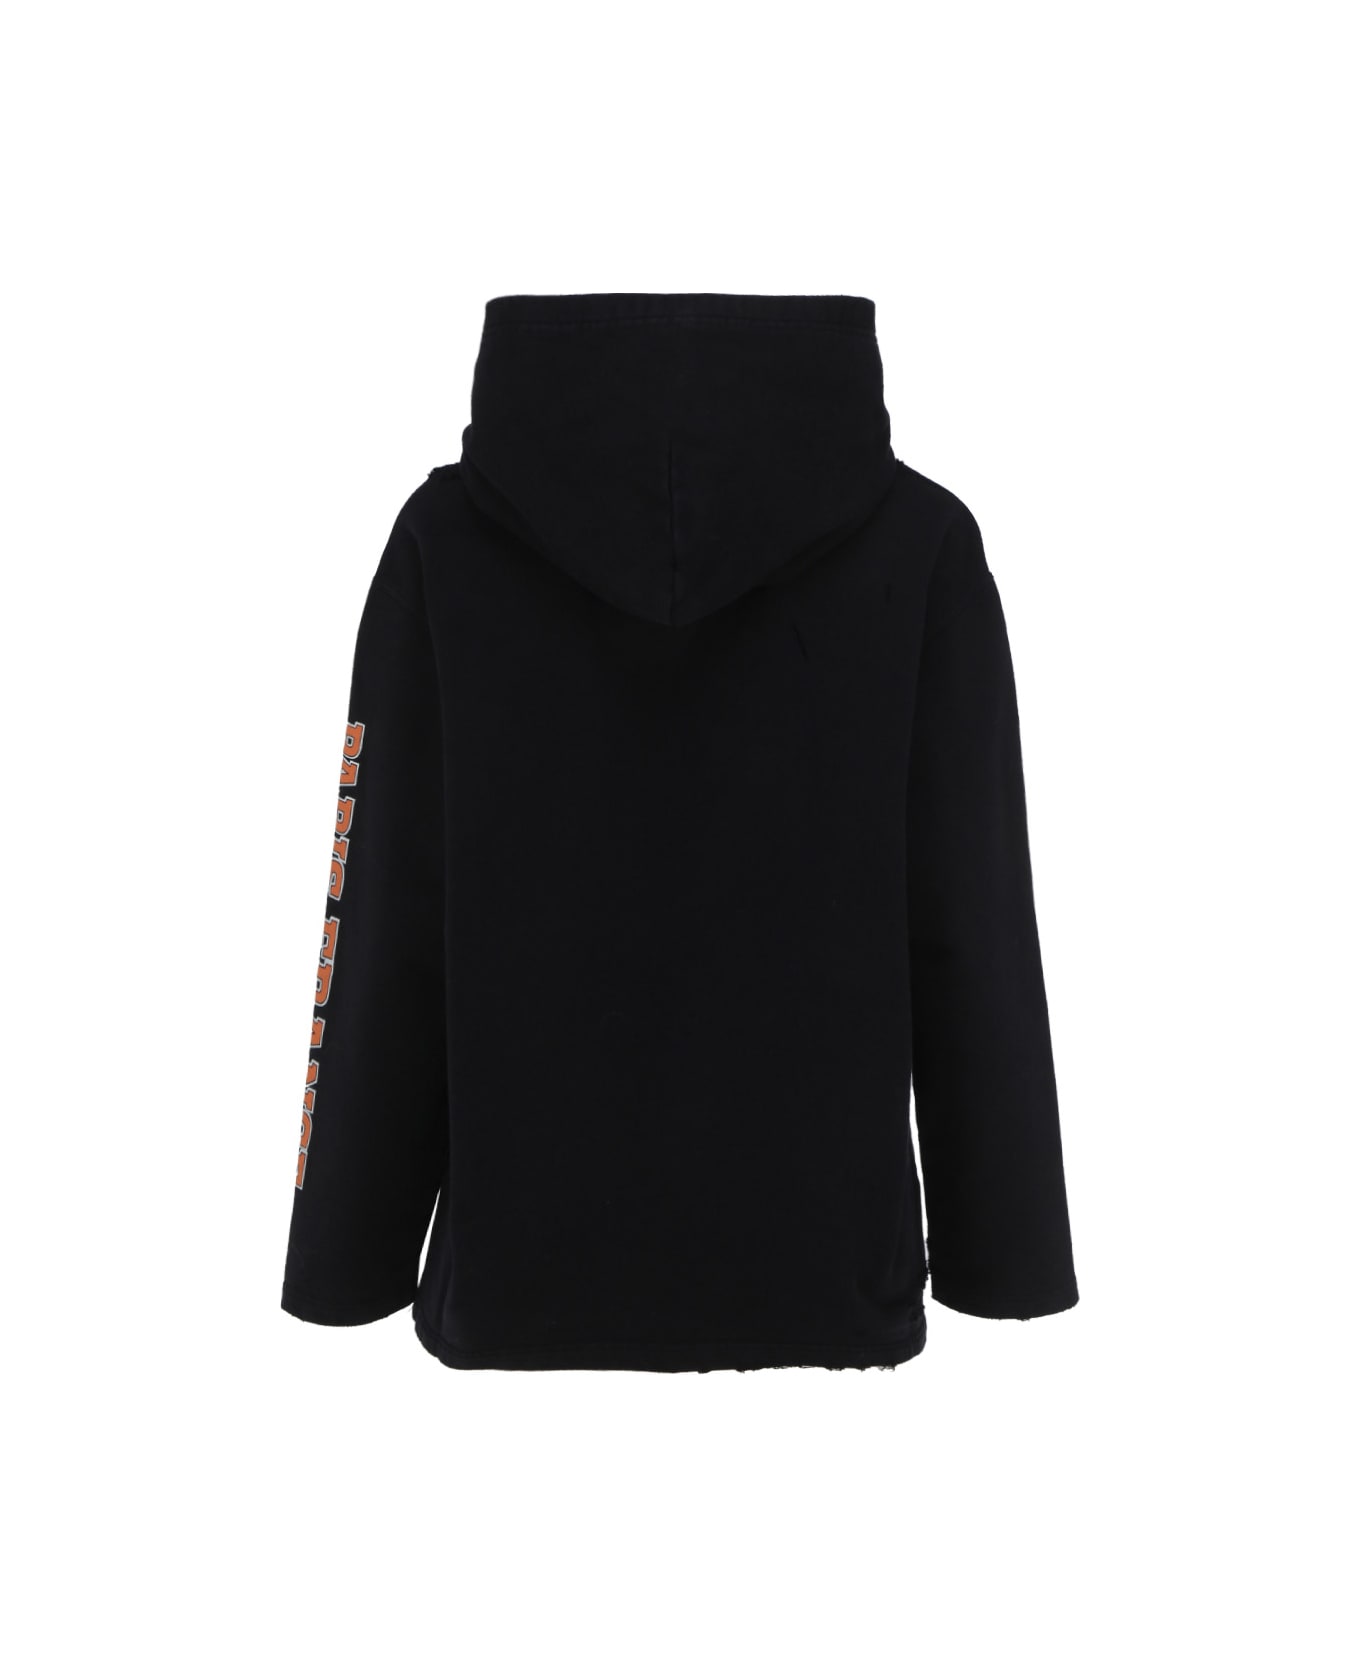 Balenciaga Cropped Hoodie - Black/orange/white w